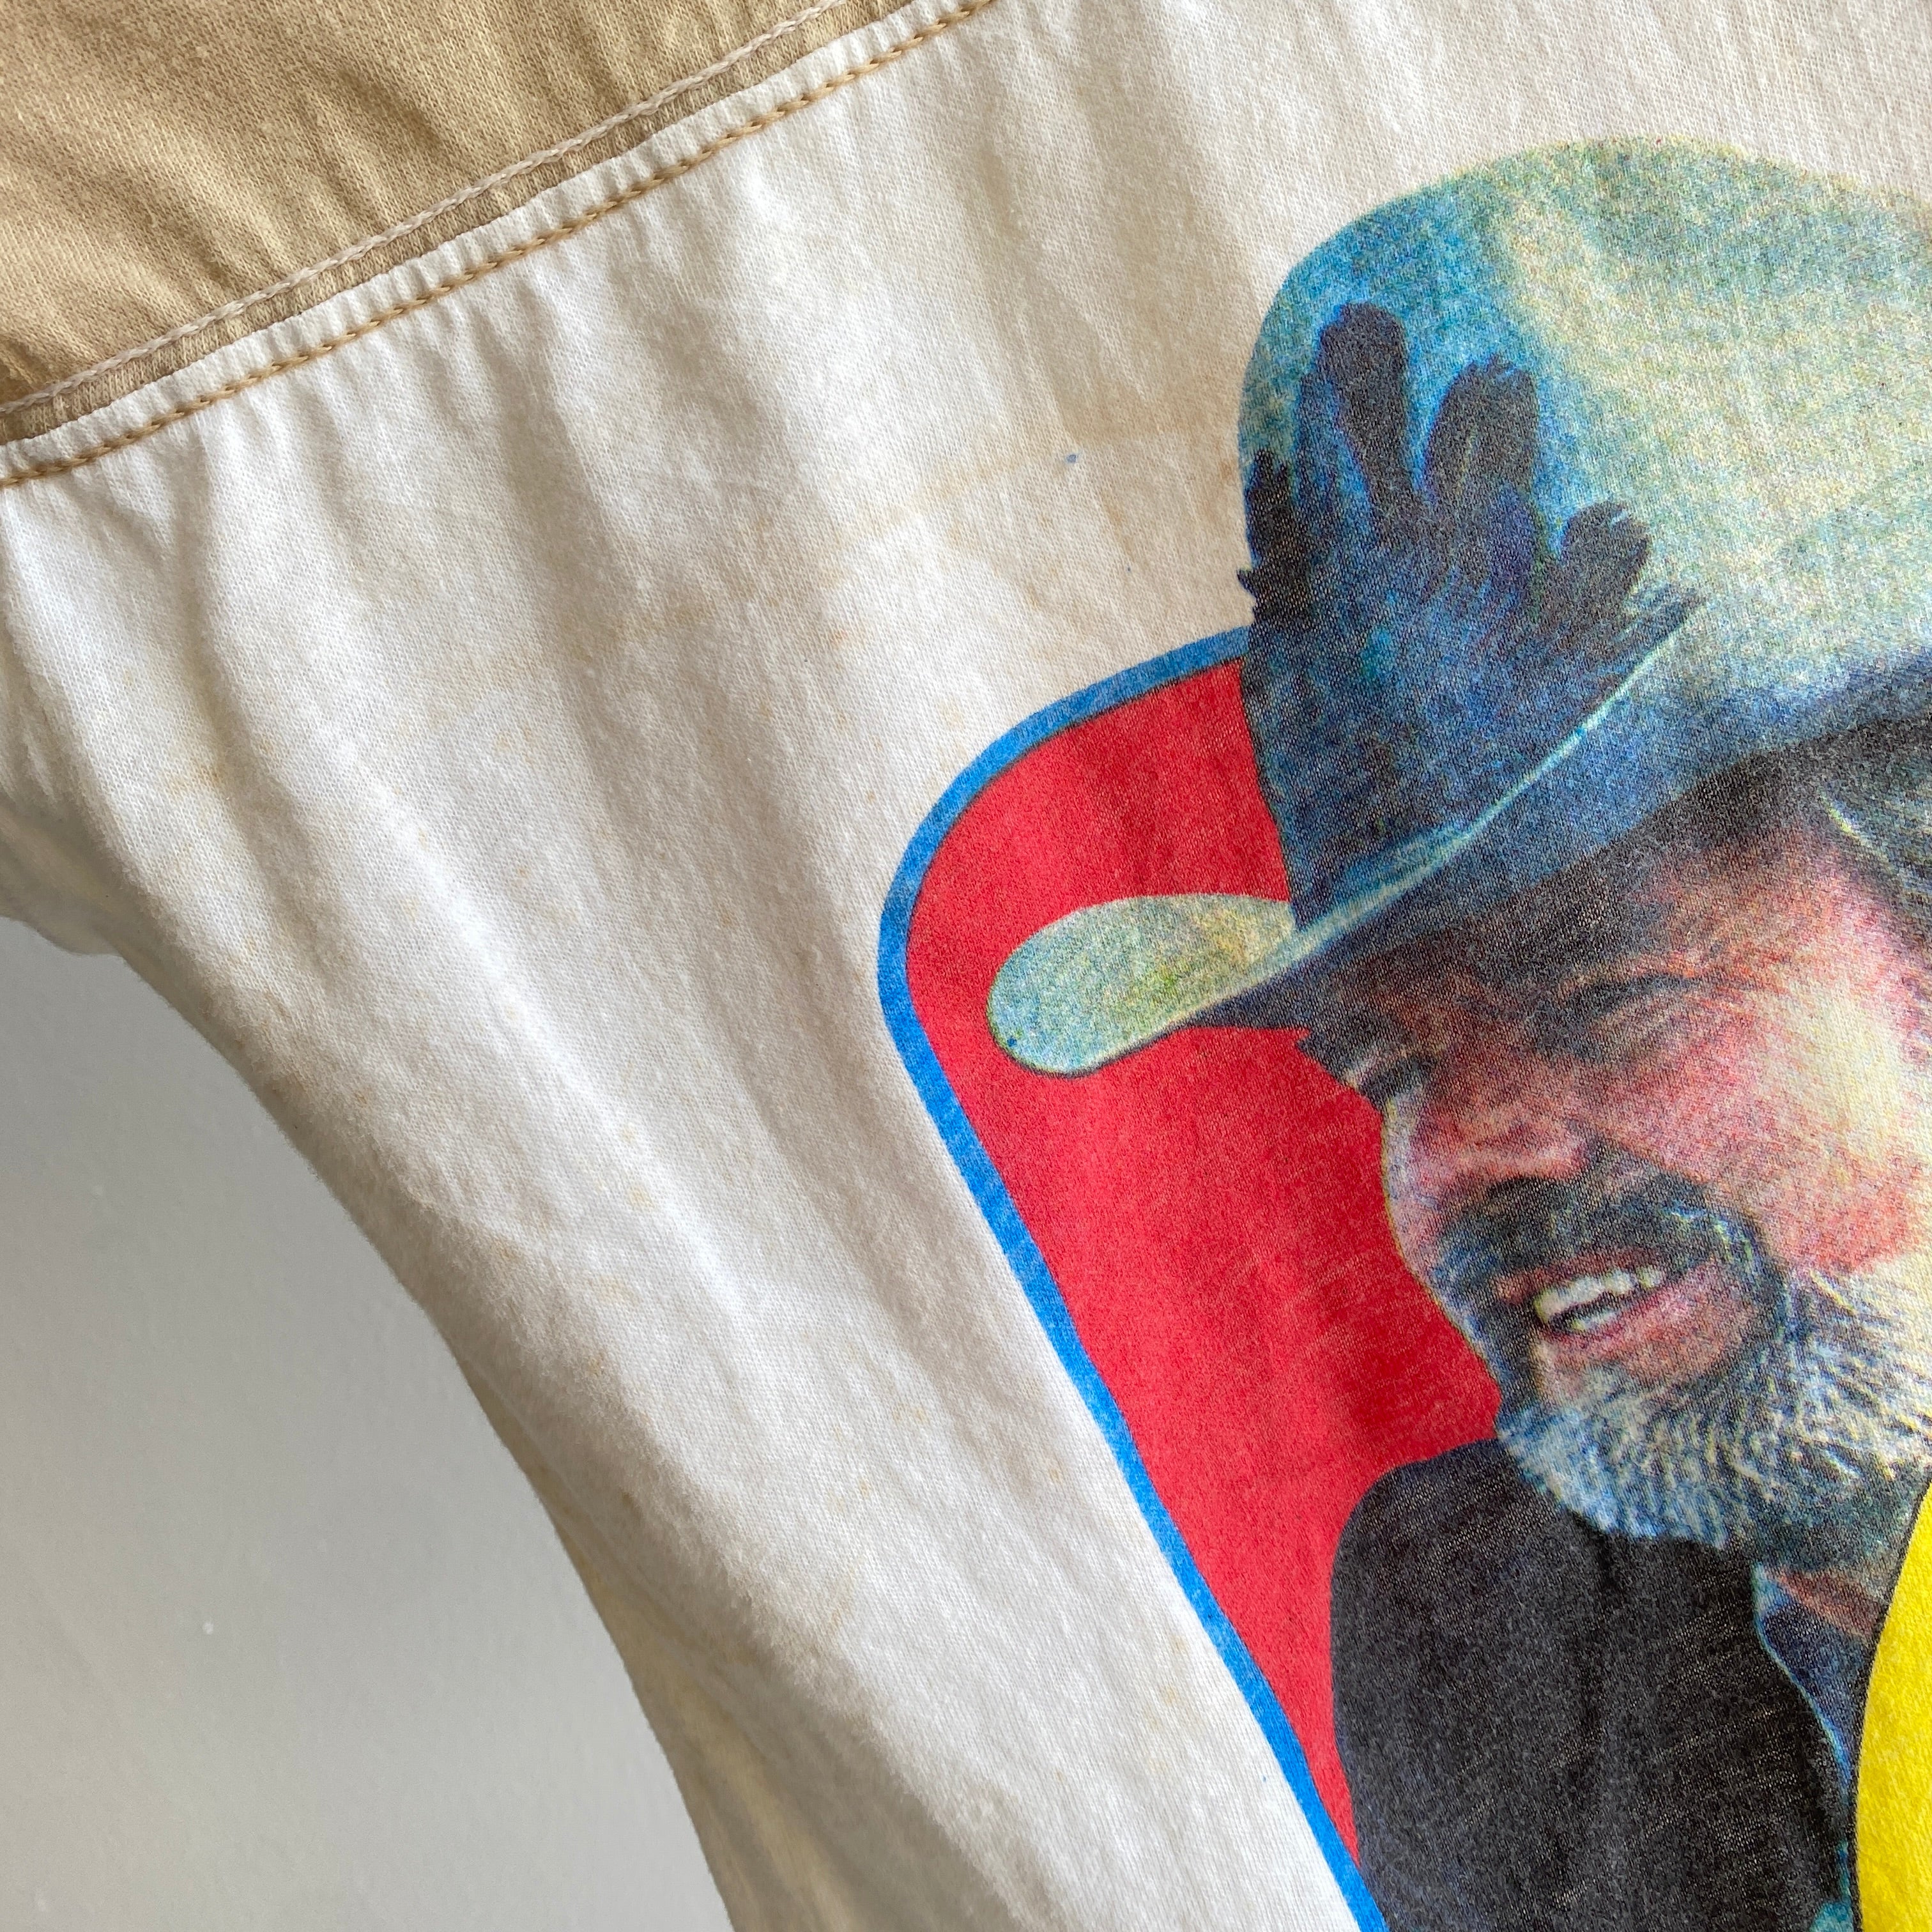 1981 Kenny Rogers Soft Thin Football Style T-Shirt - Yee Haw!